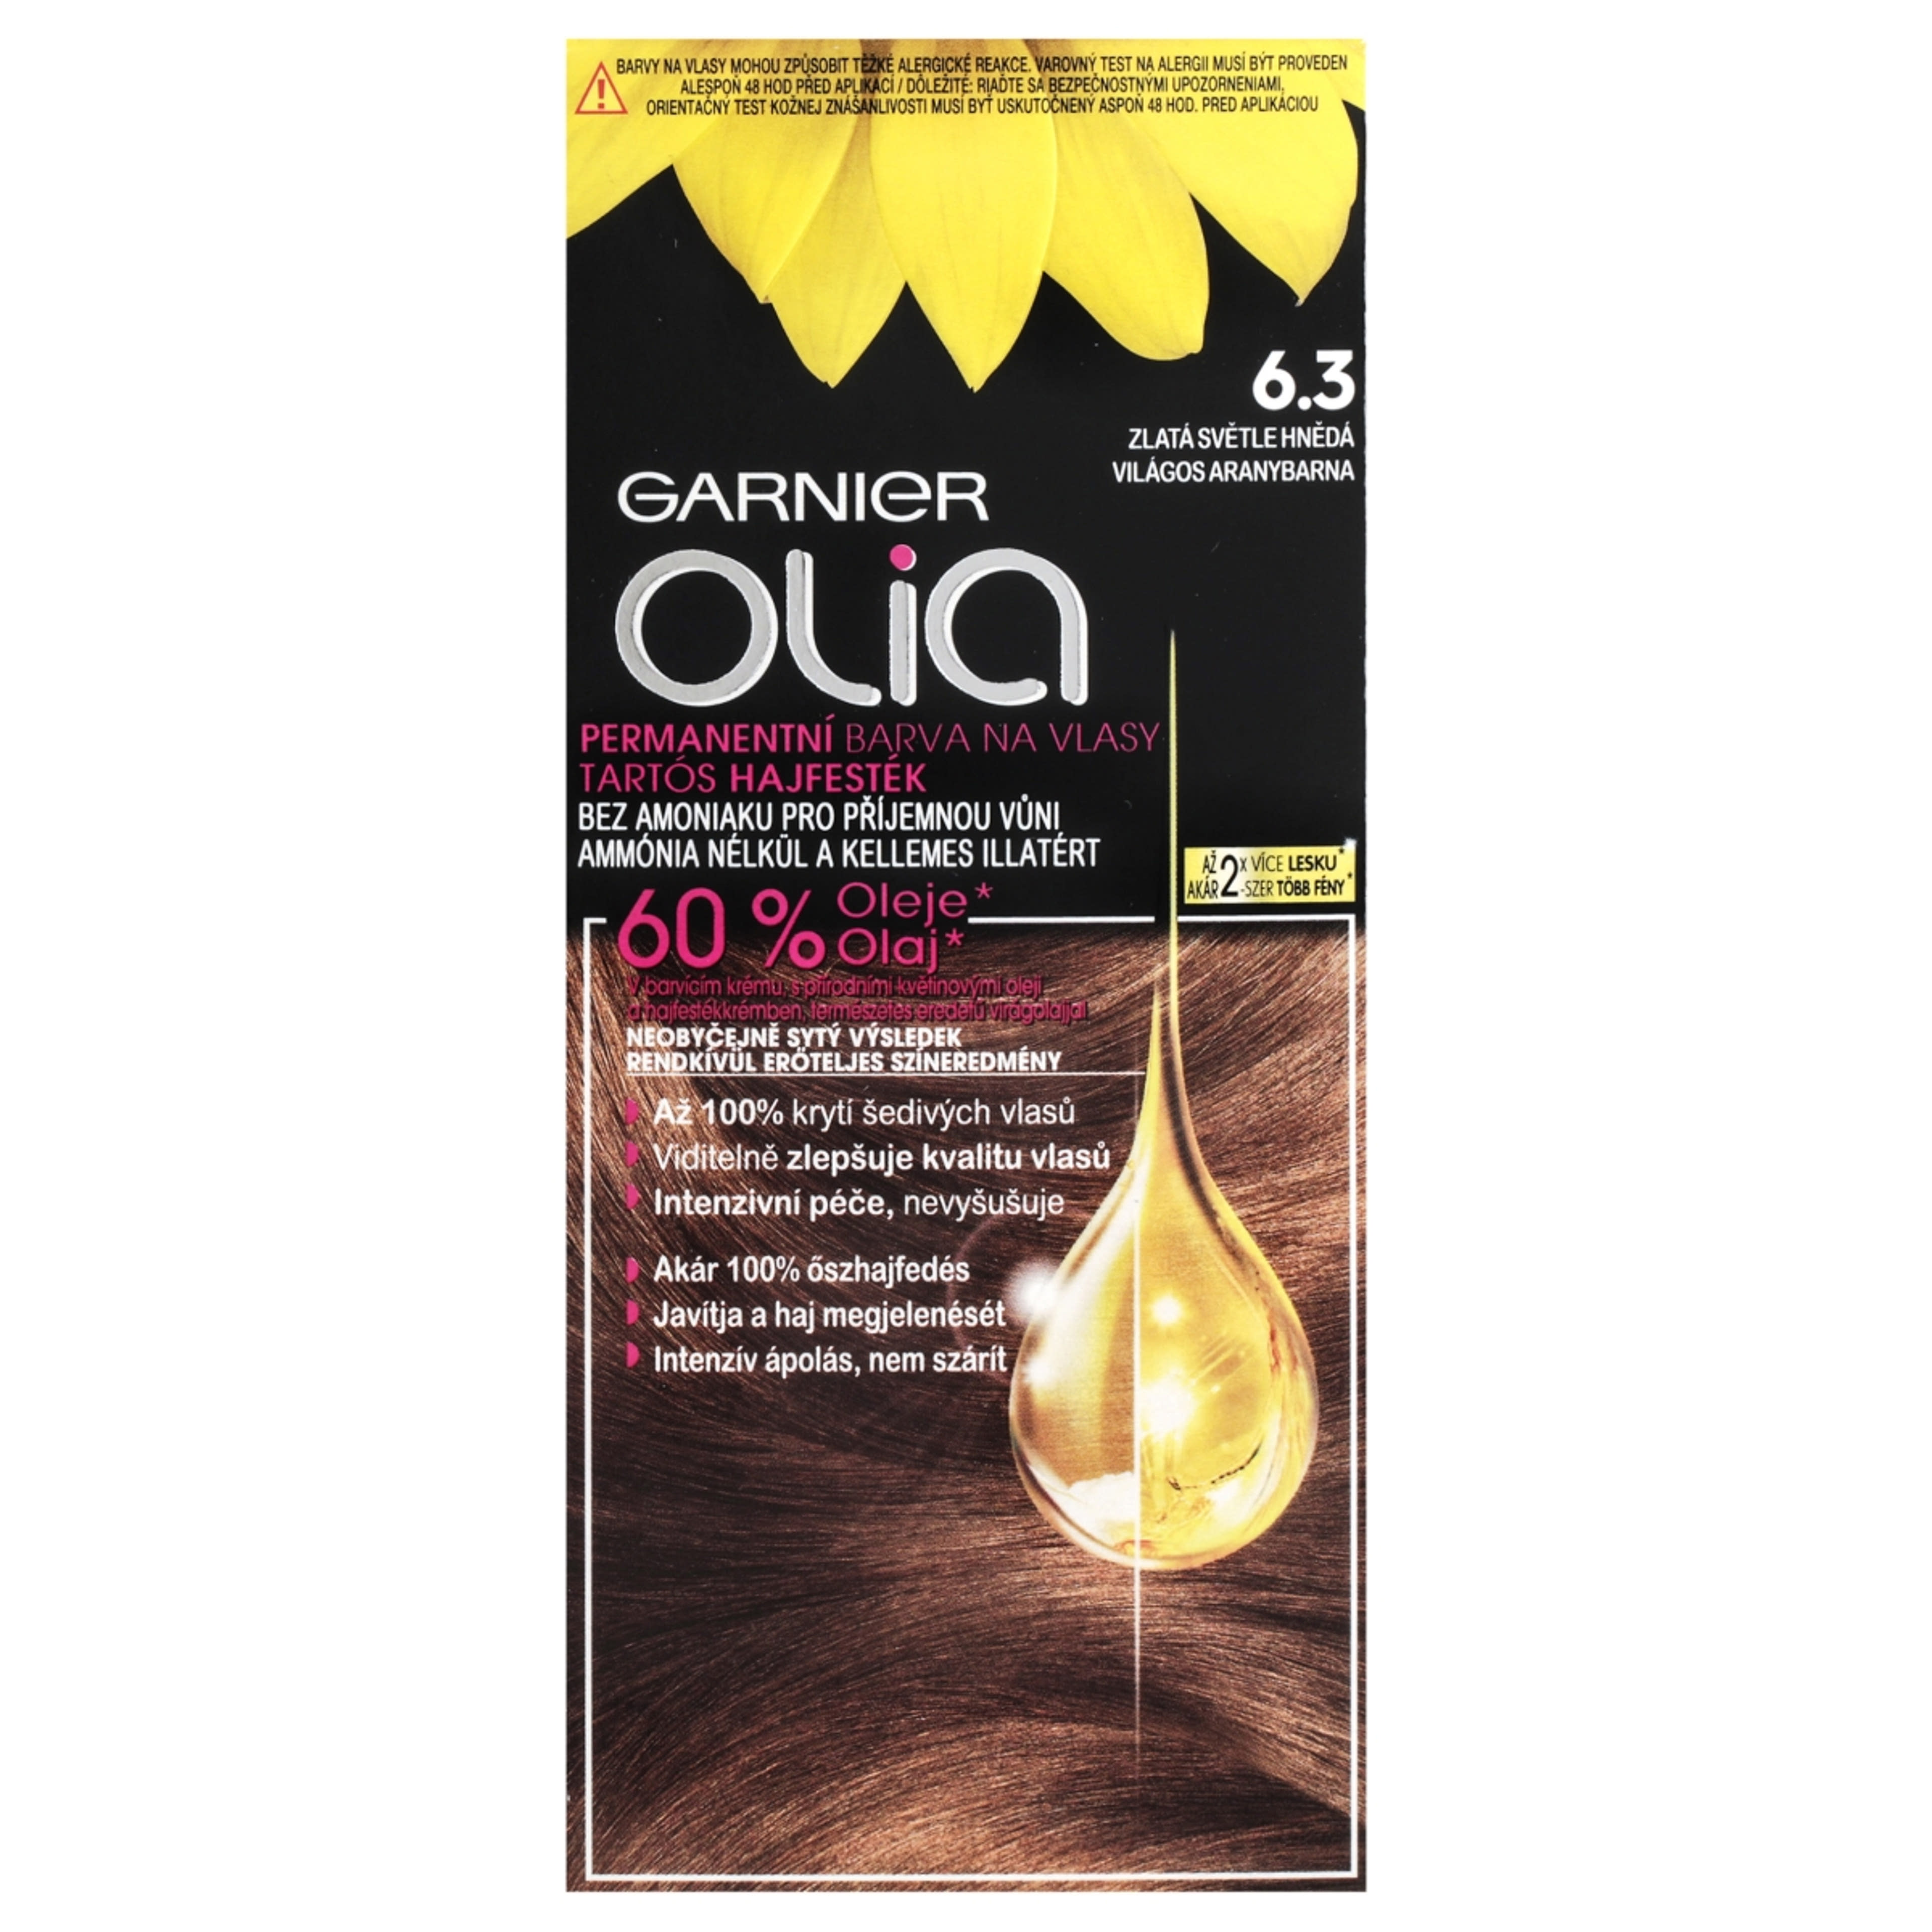 Garnier Olia tartós hajfesték 6.3 Világos aranybarna - 1 db-3